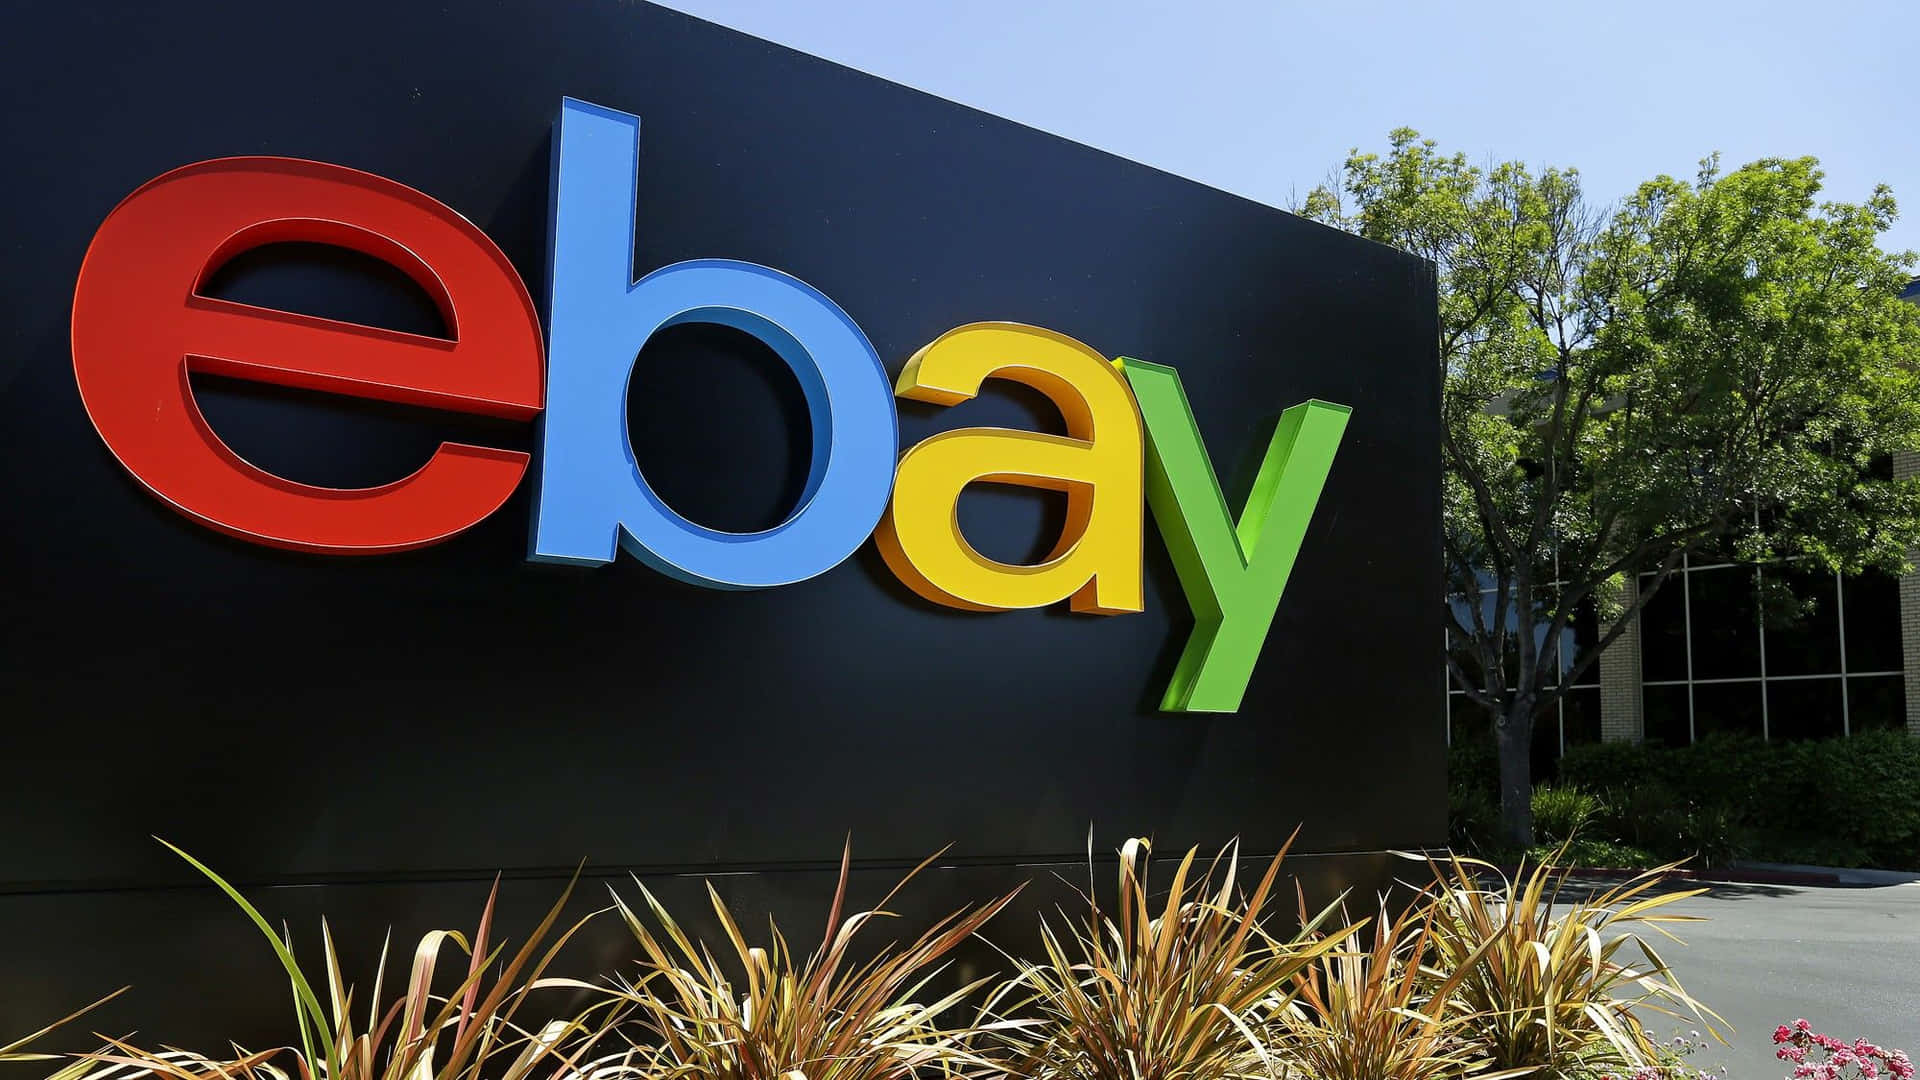 Ebay's Headquarters In Los Angeles